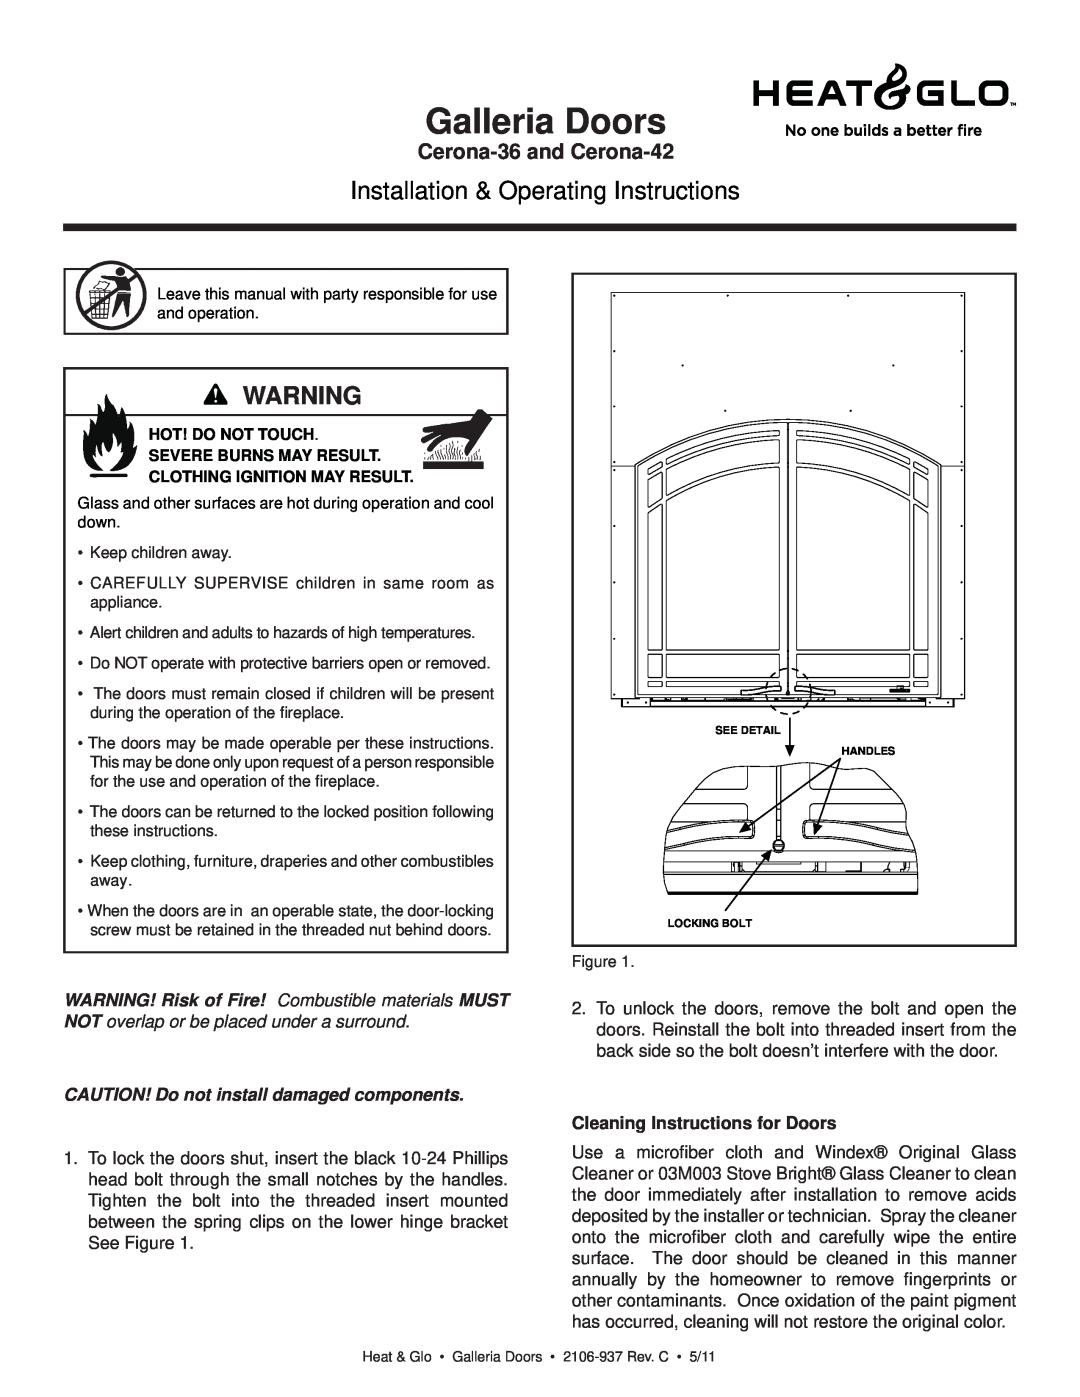 Heat & Glo LifeStyle manual Galleria Doors, Installation & Operating Instructions, Cerona-36 and Cerona-42 